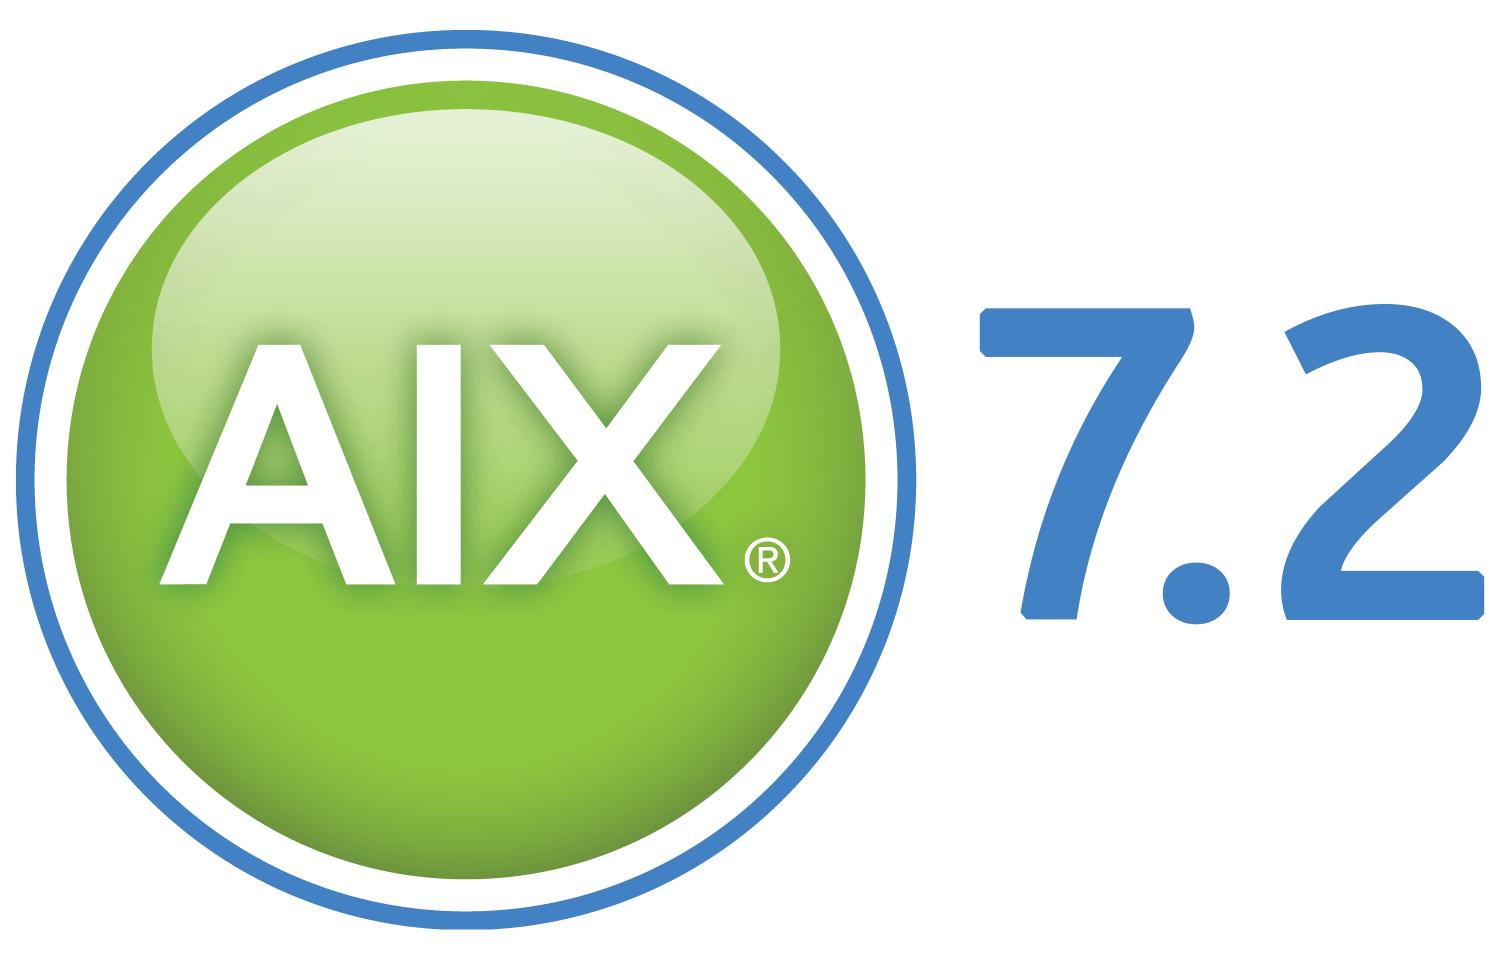 AIX Logo - AIX 7.2 and October Power software announcements | The secret ...